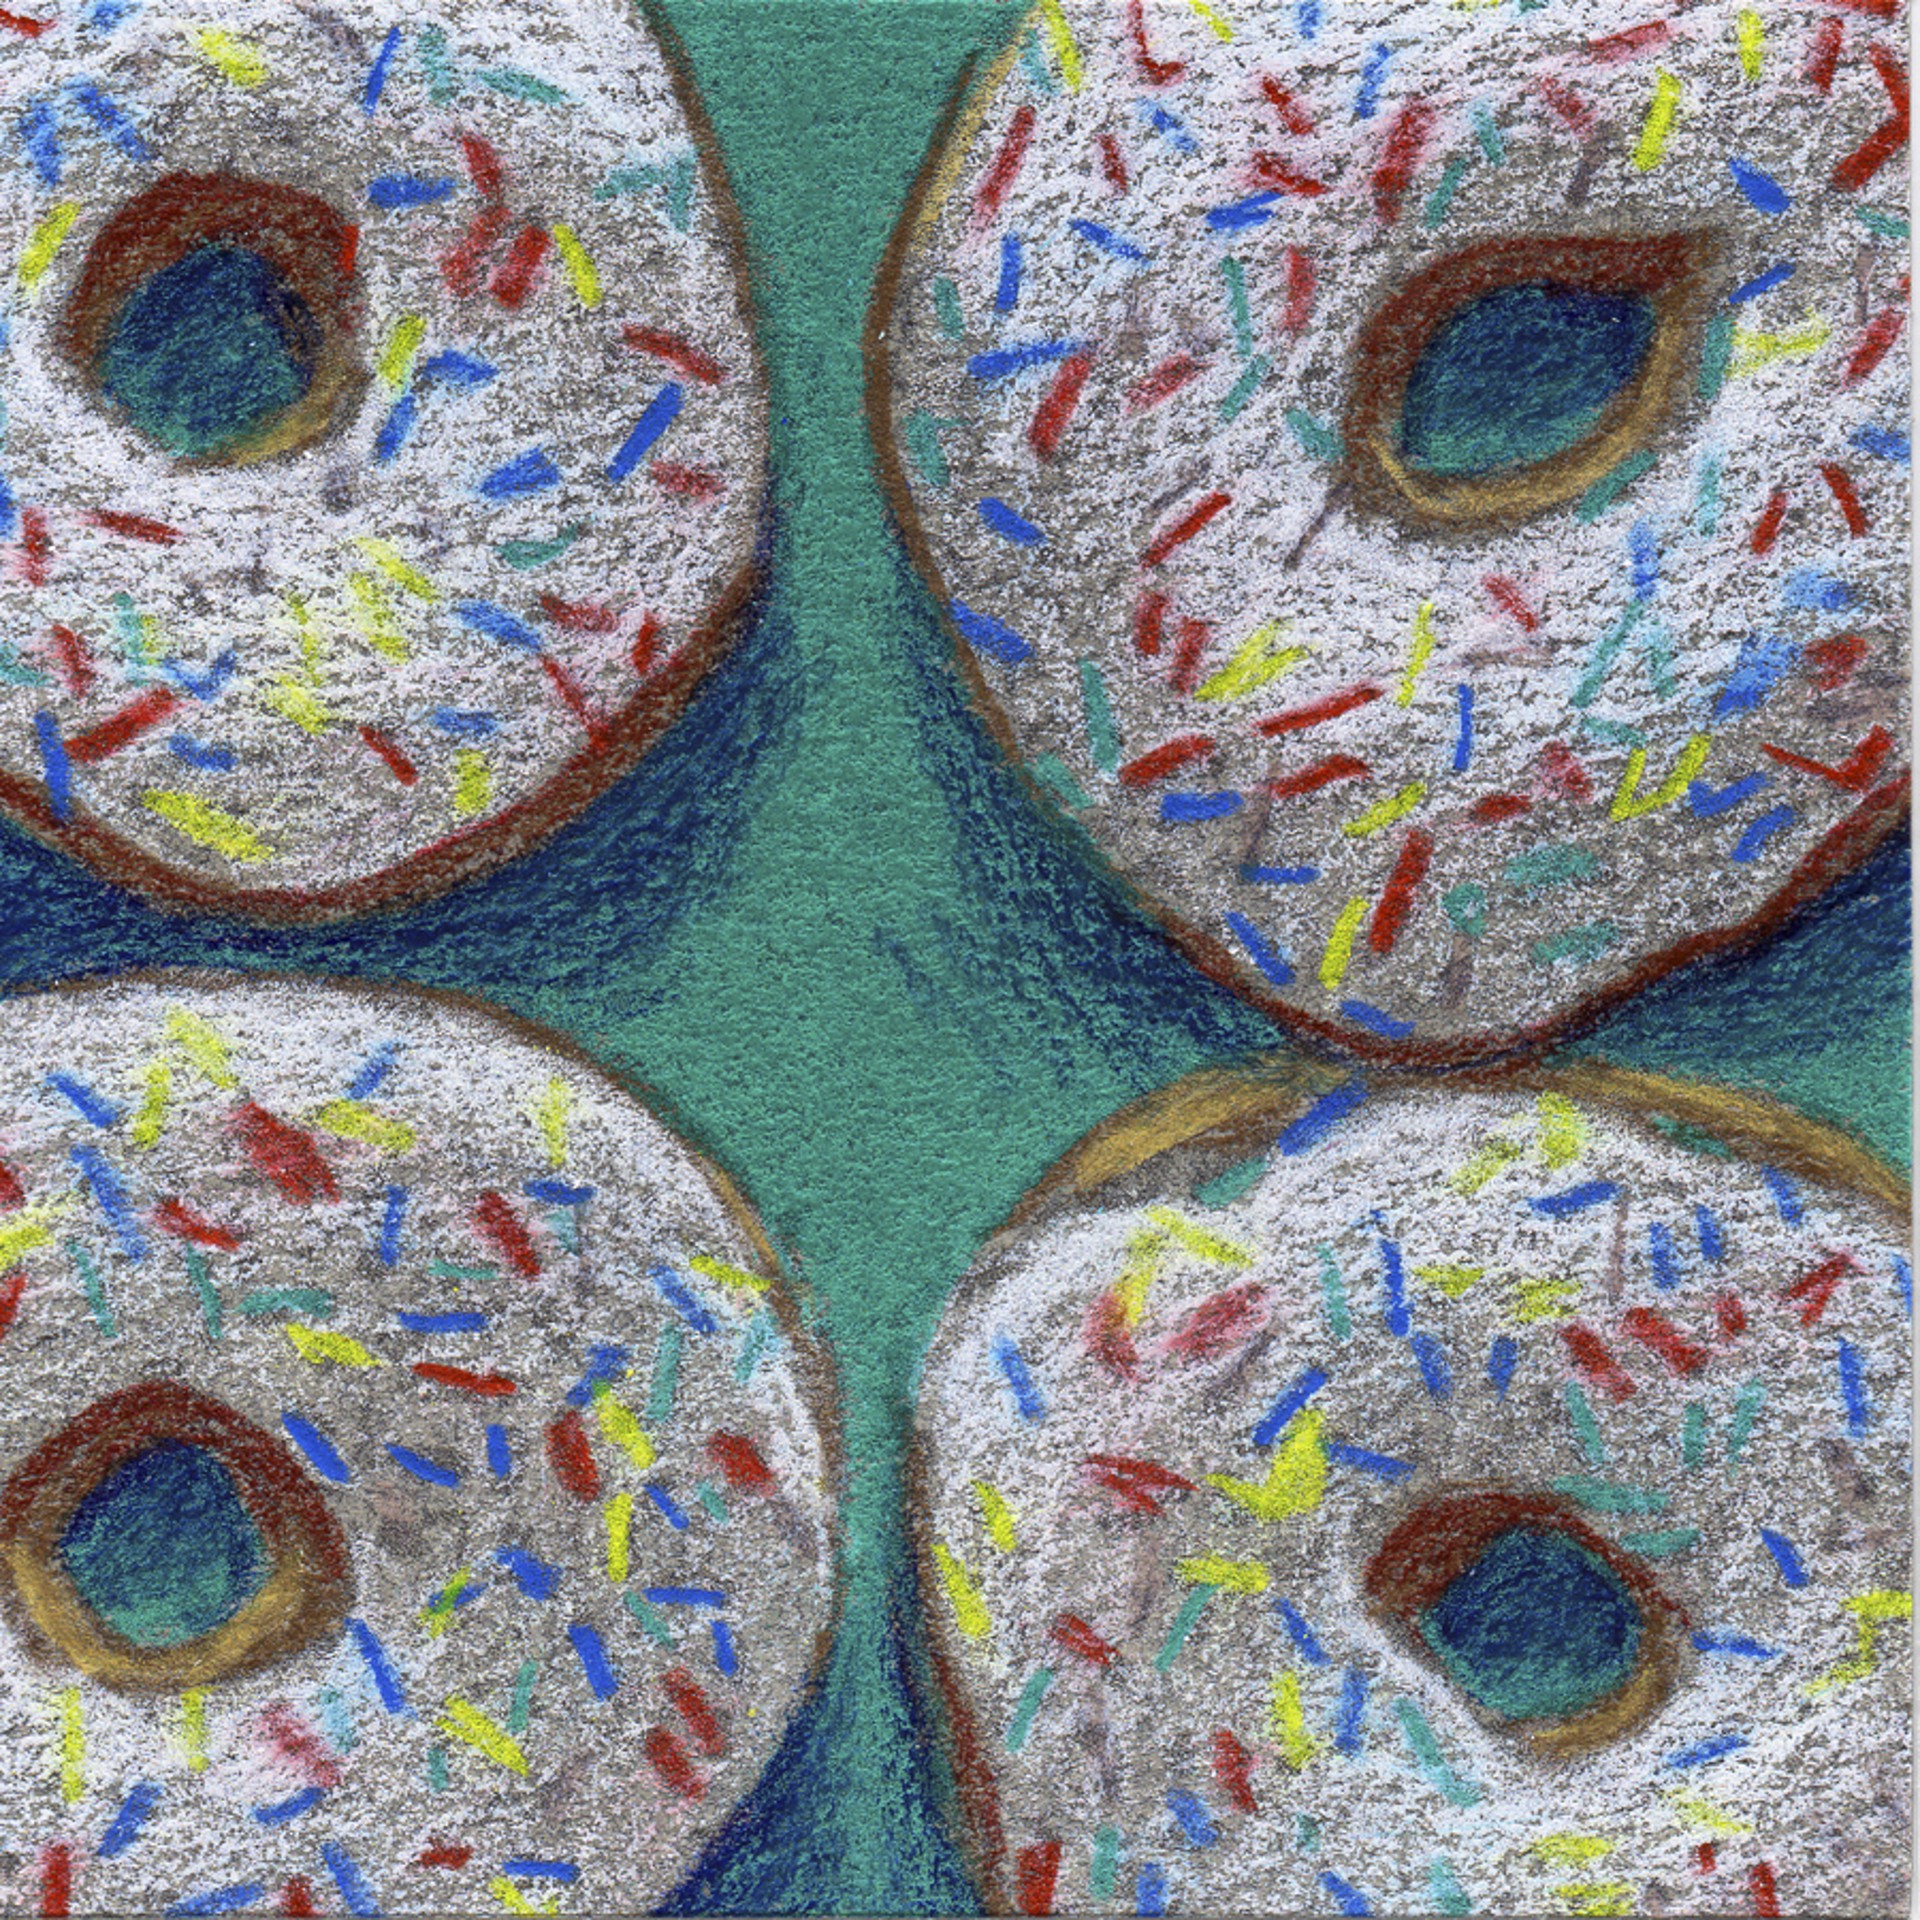 4 Donuts by Neva Mikulicz